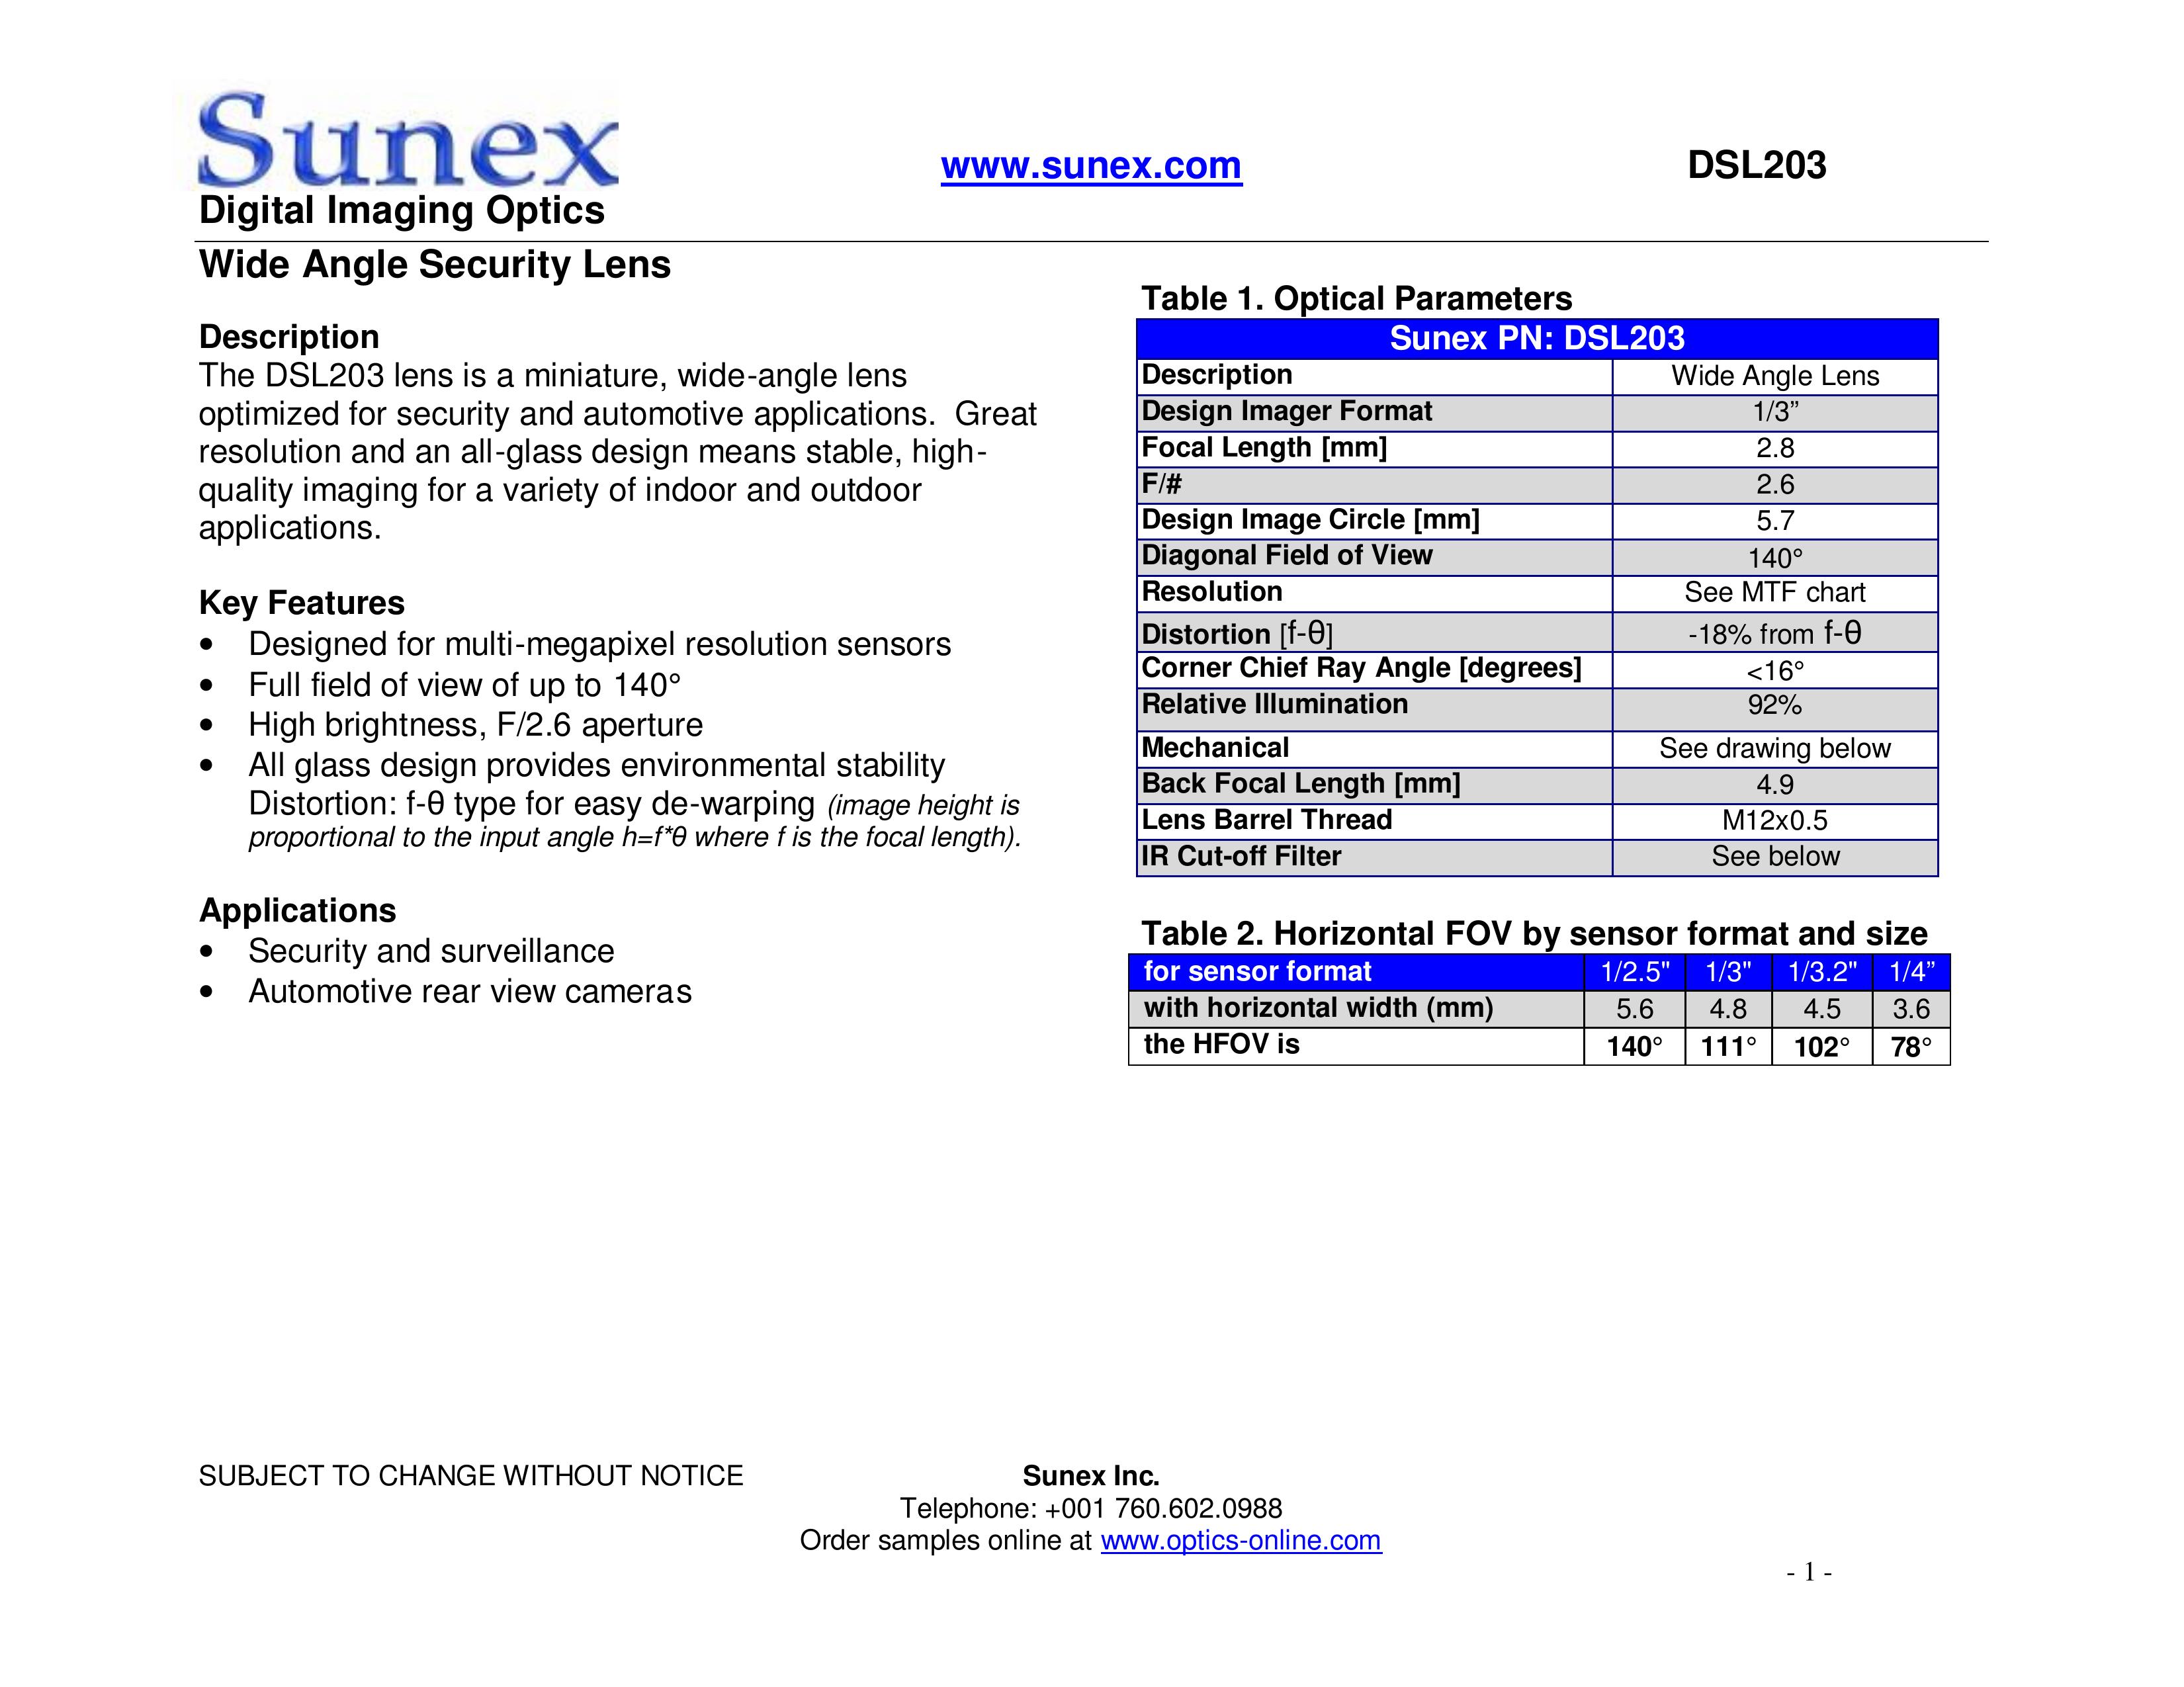 Axis Communications DSL203 Camera Lens User Manual